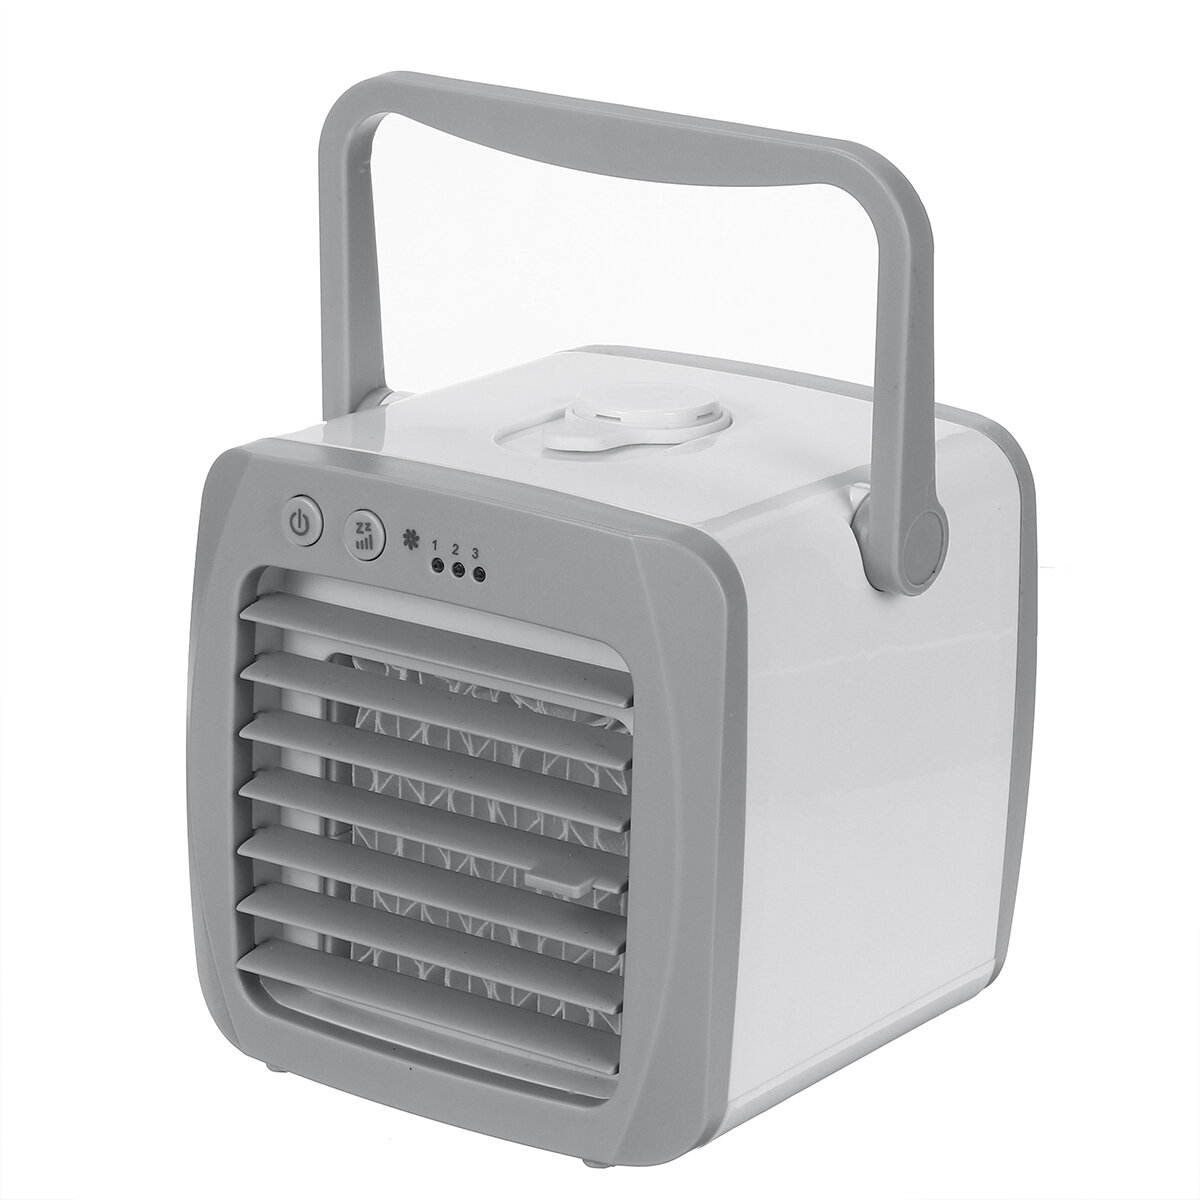 

3 Speeds USB Portable Air Conditioner Mini Cooler For Bedroom Desktop Cooler Fan